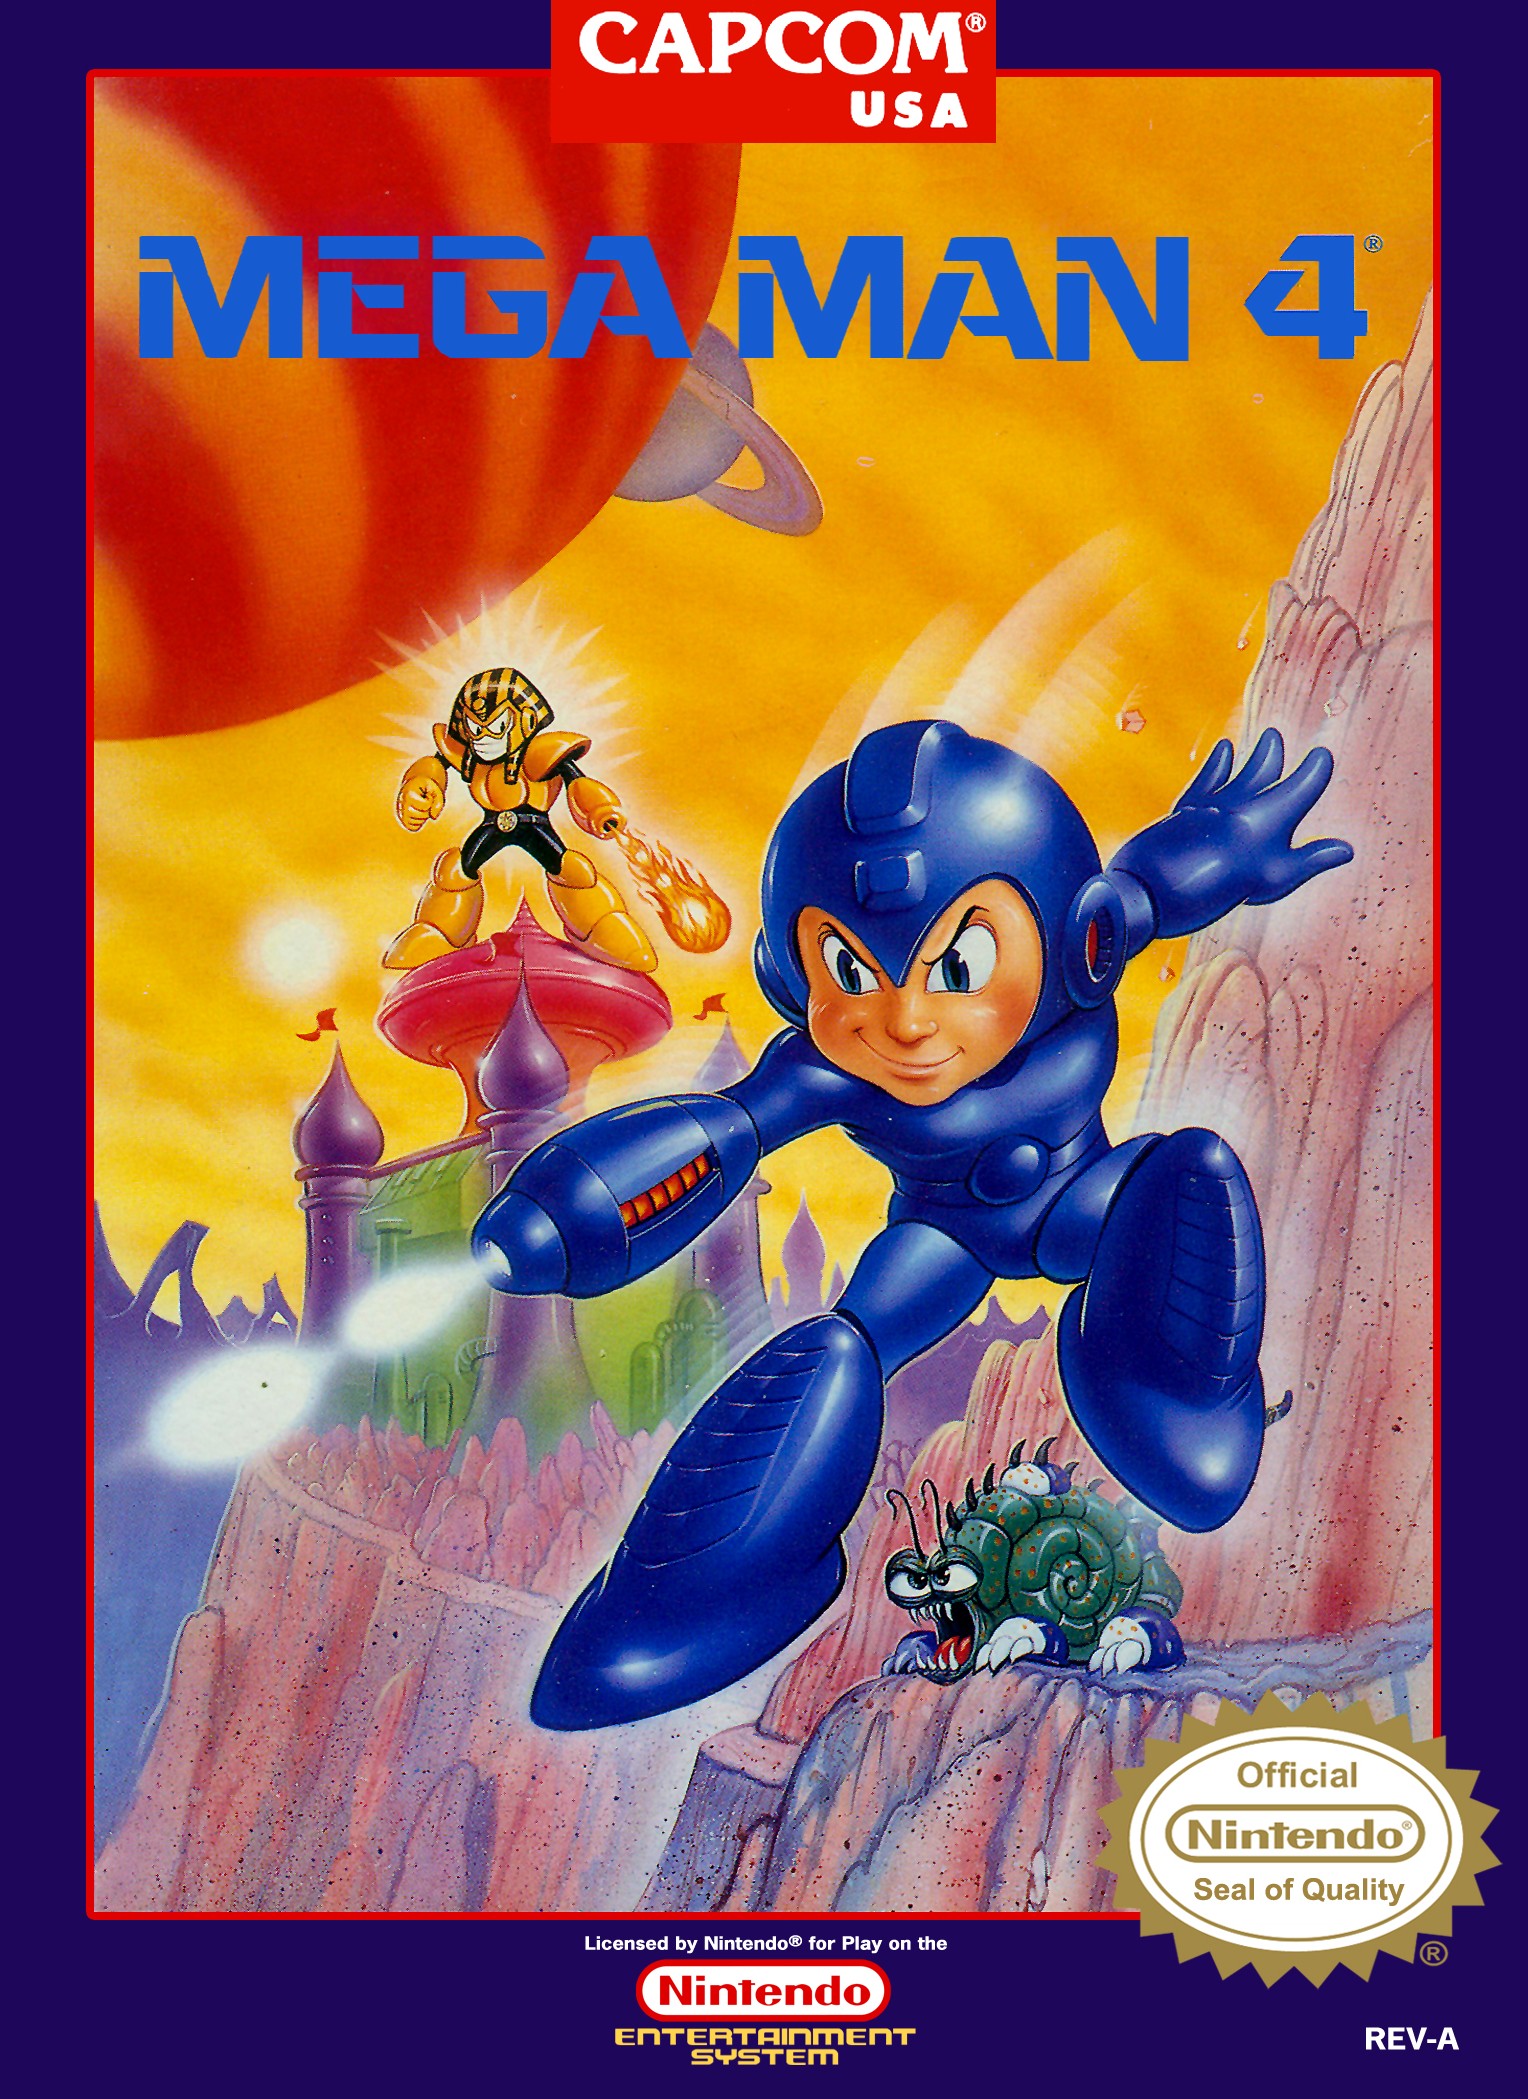 'Mega Man 4'